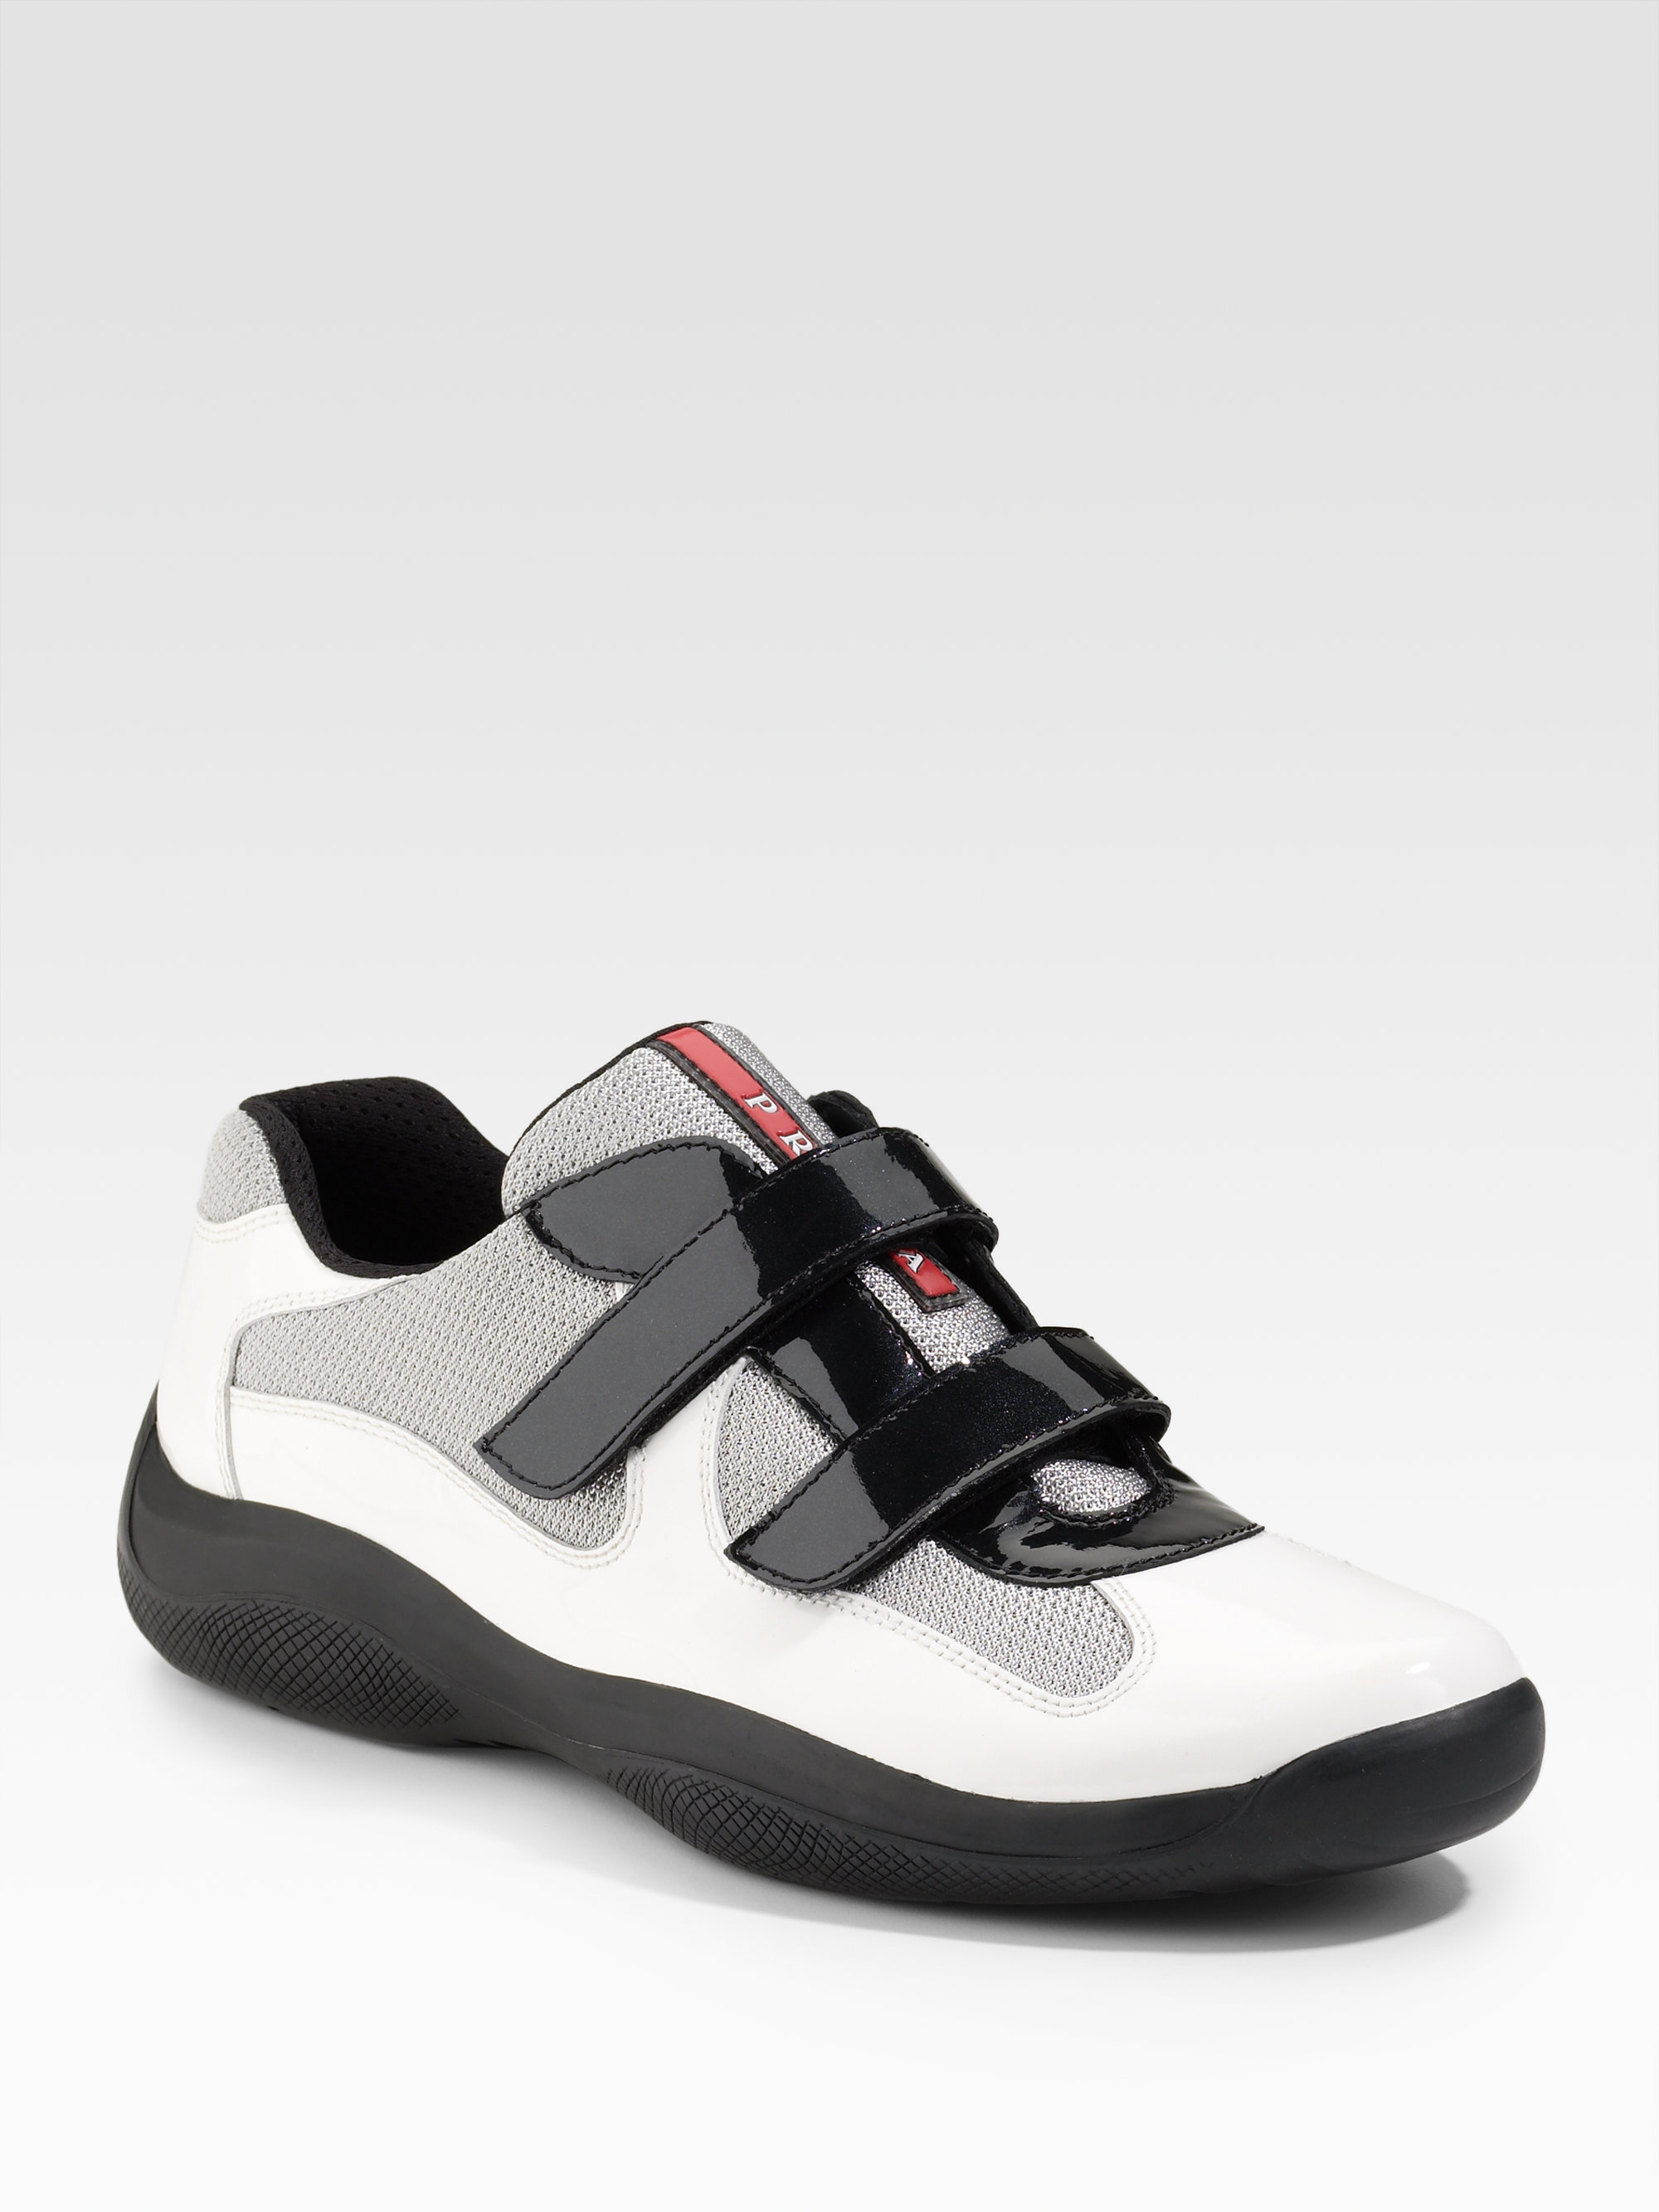 prada-white-silver-black-doublestrap-sneakers-product-1-7700324-664691058.jpeg  